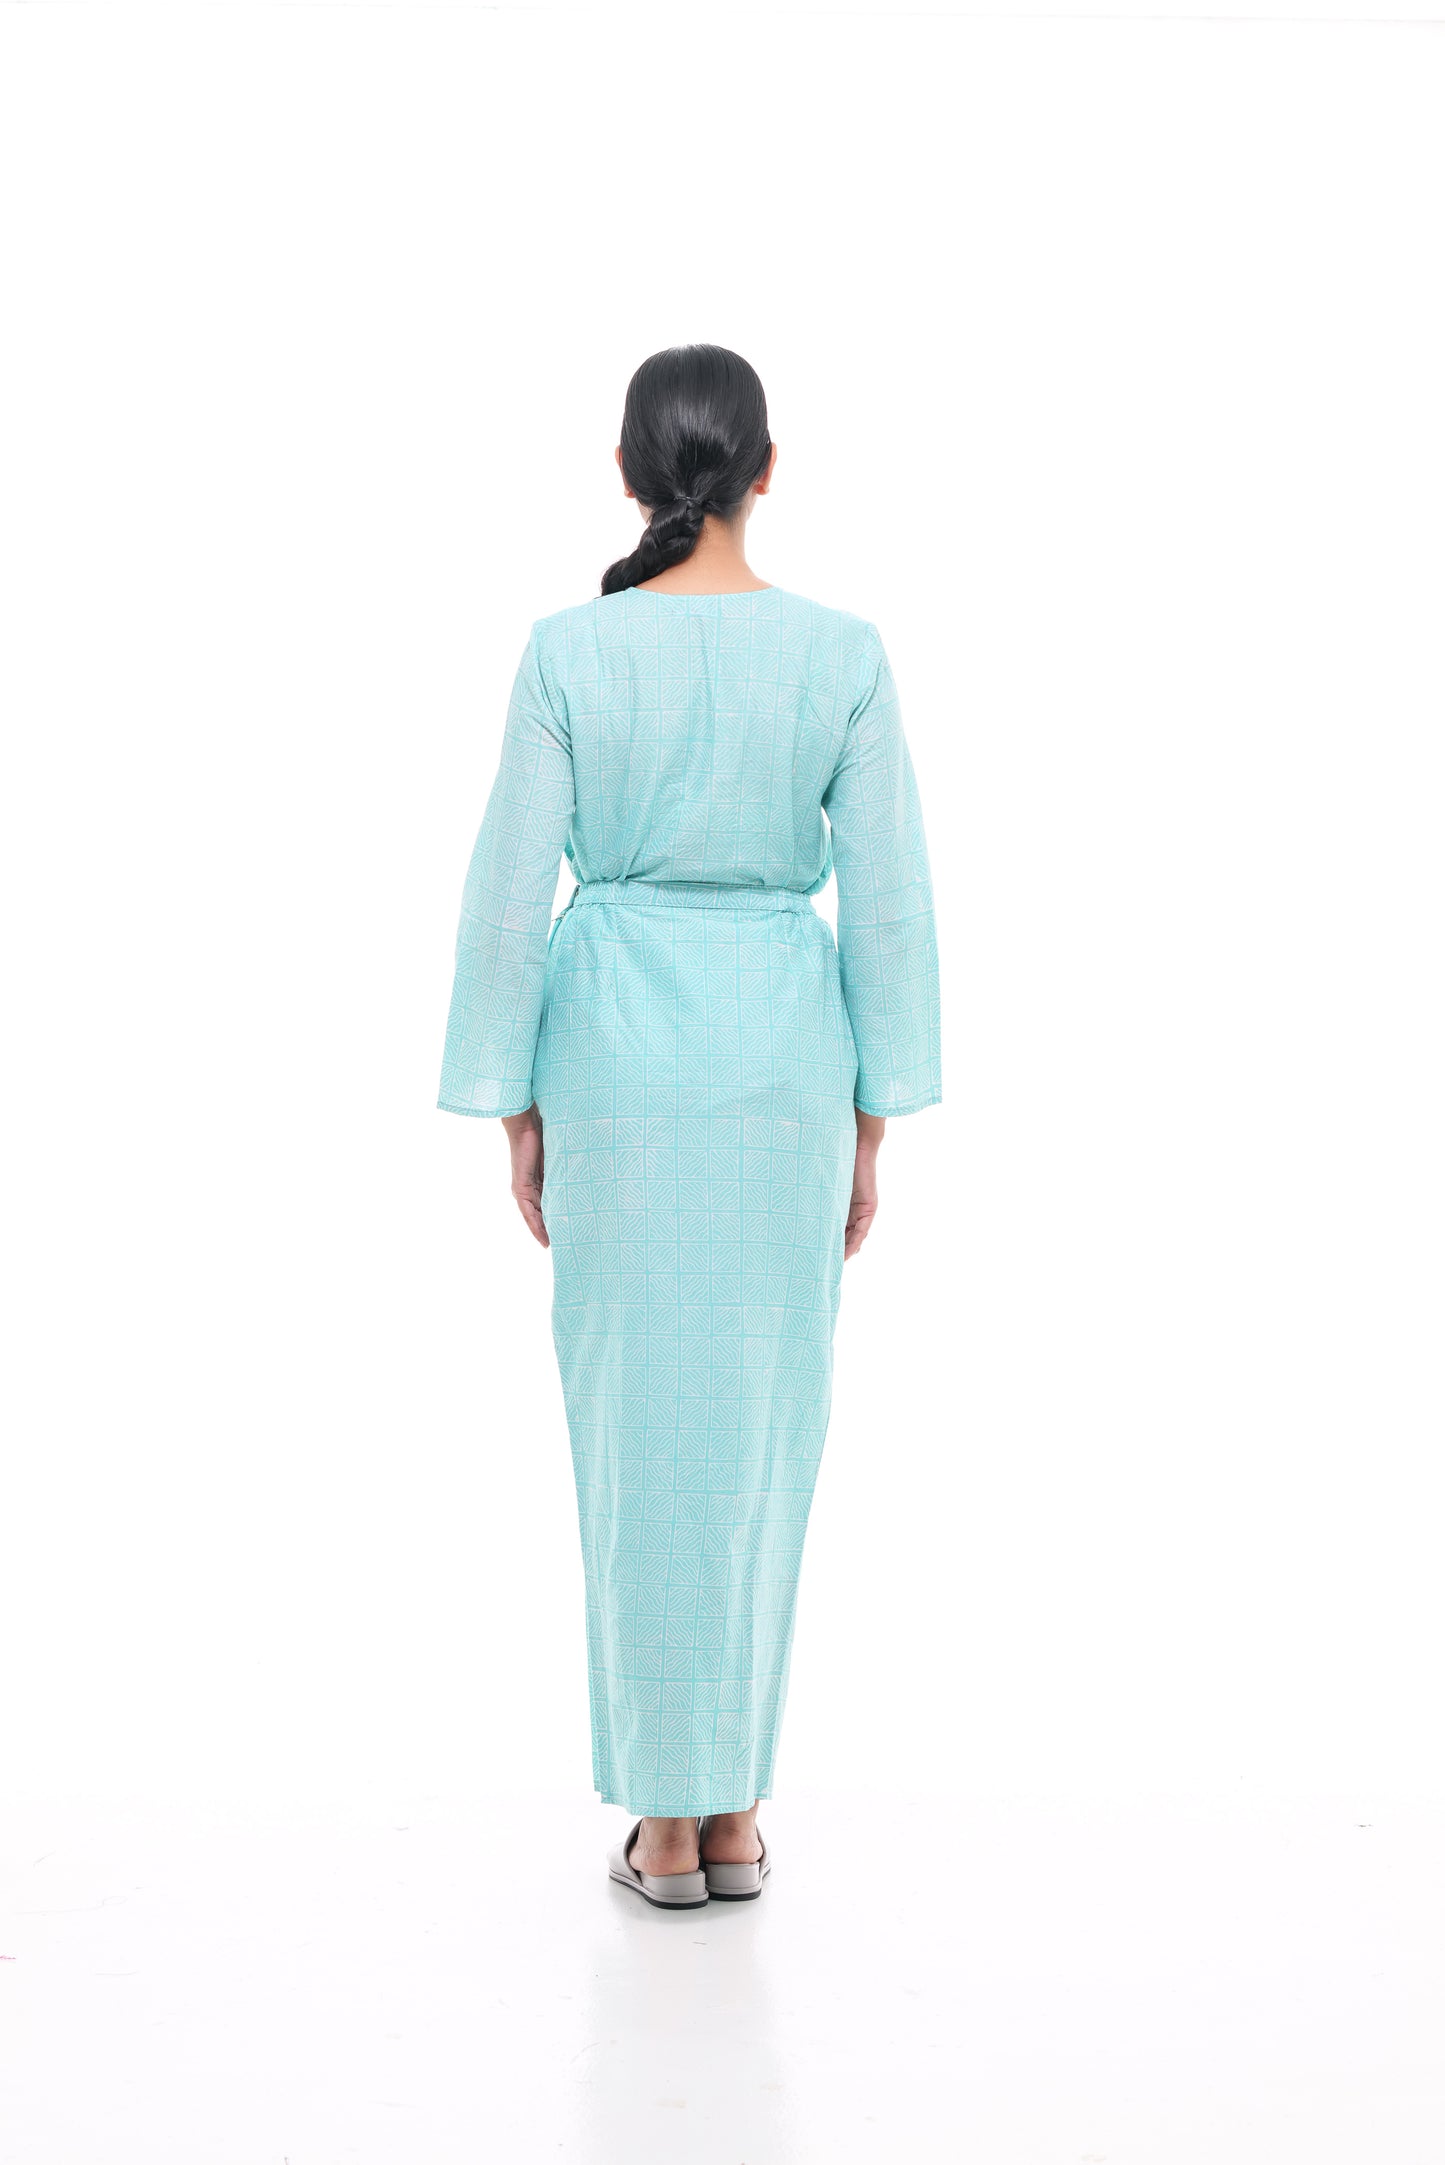 Jada Sarung in Turquoise